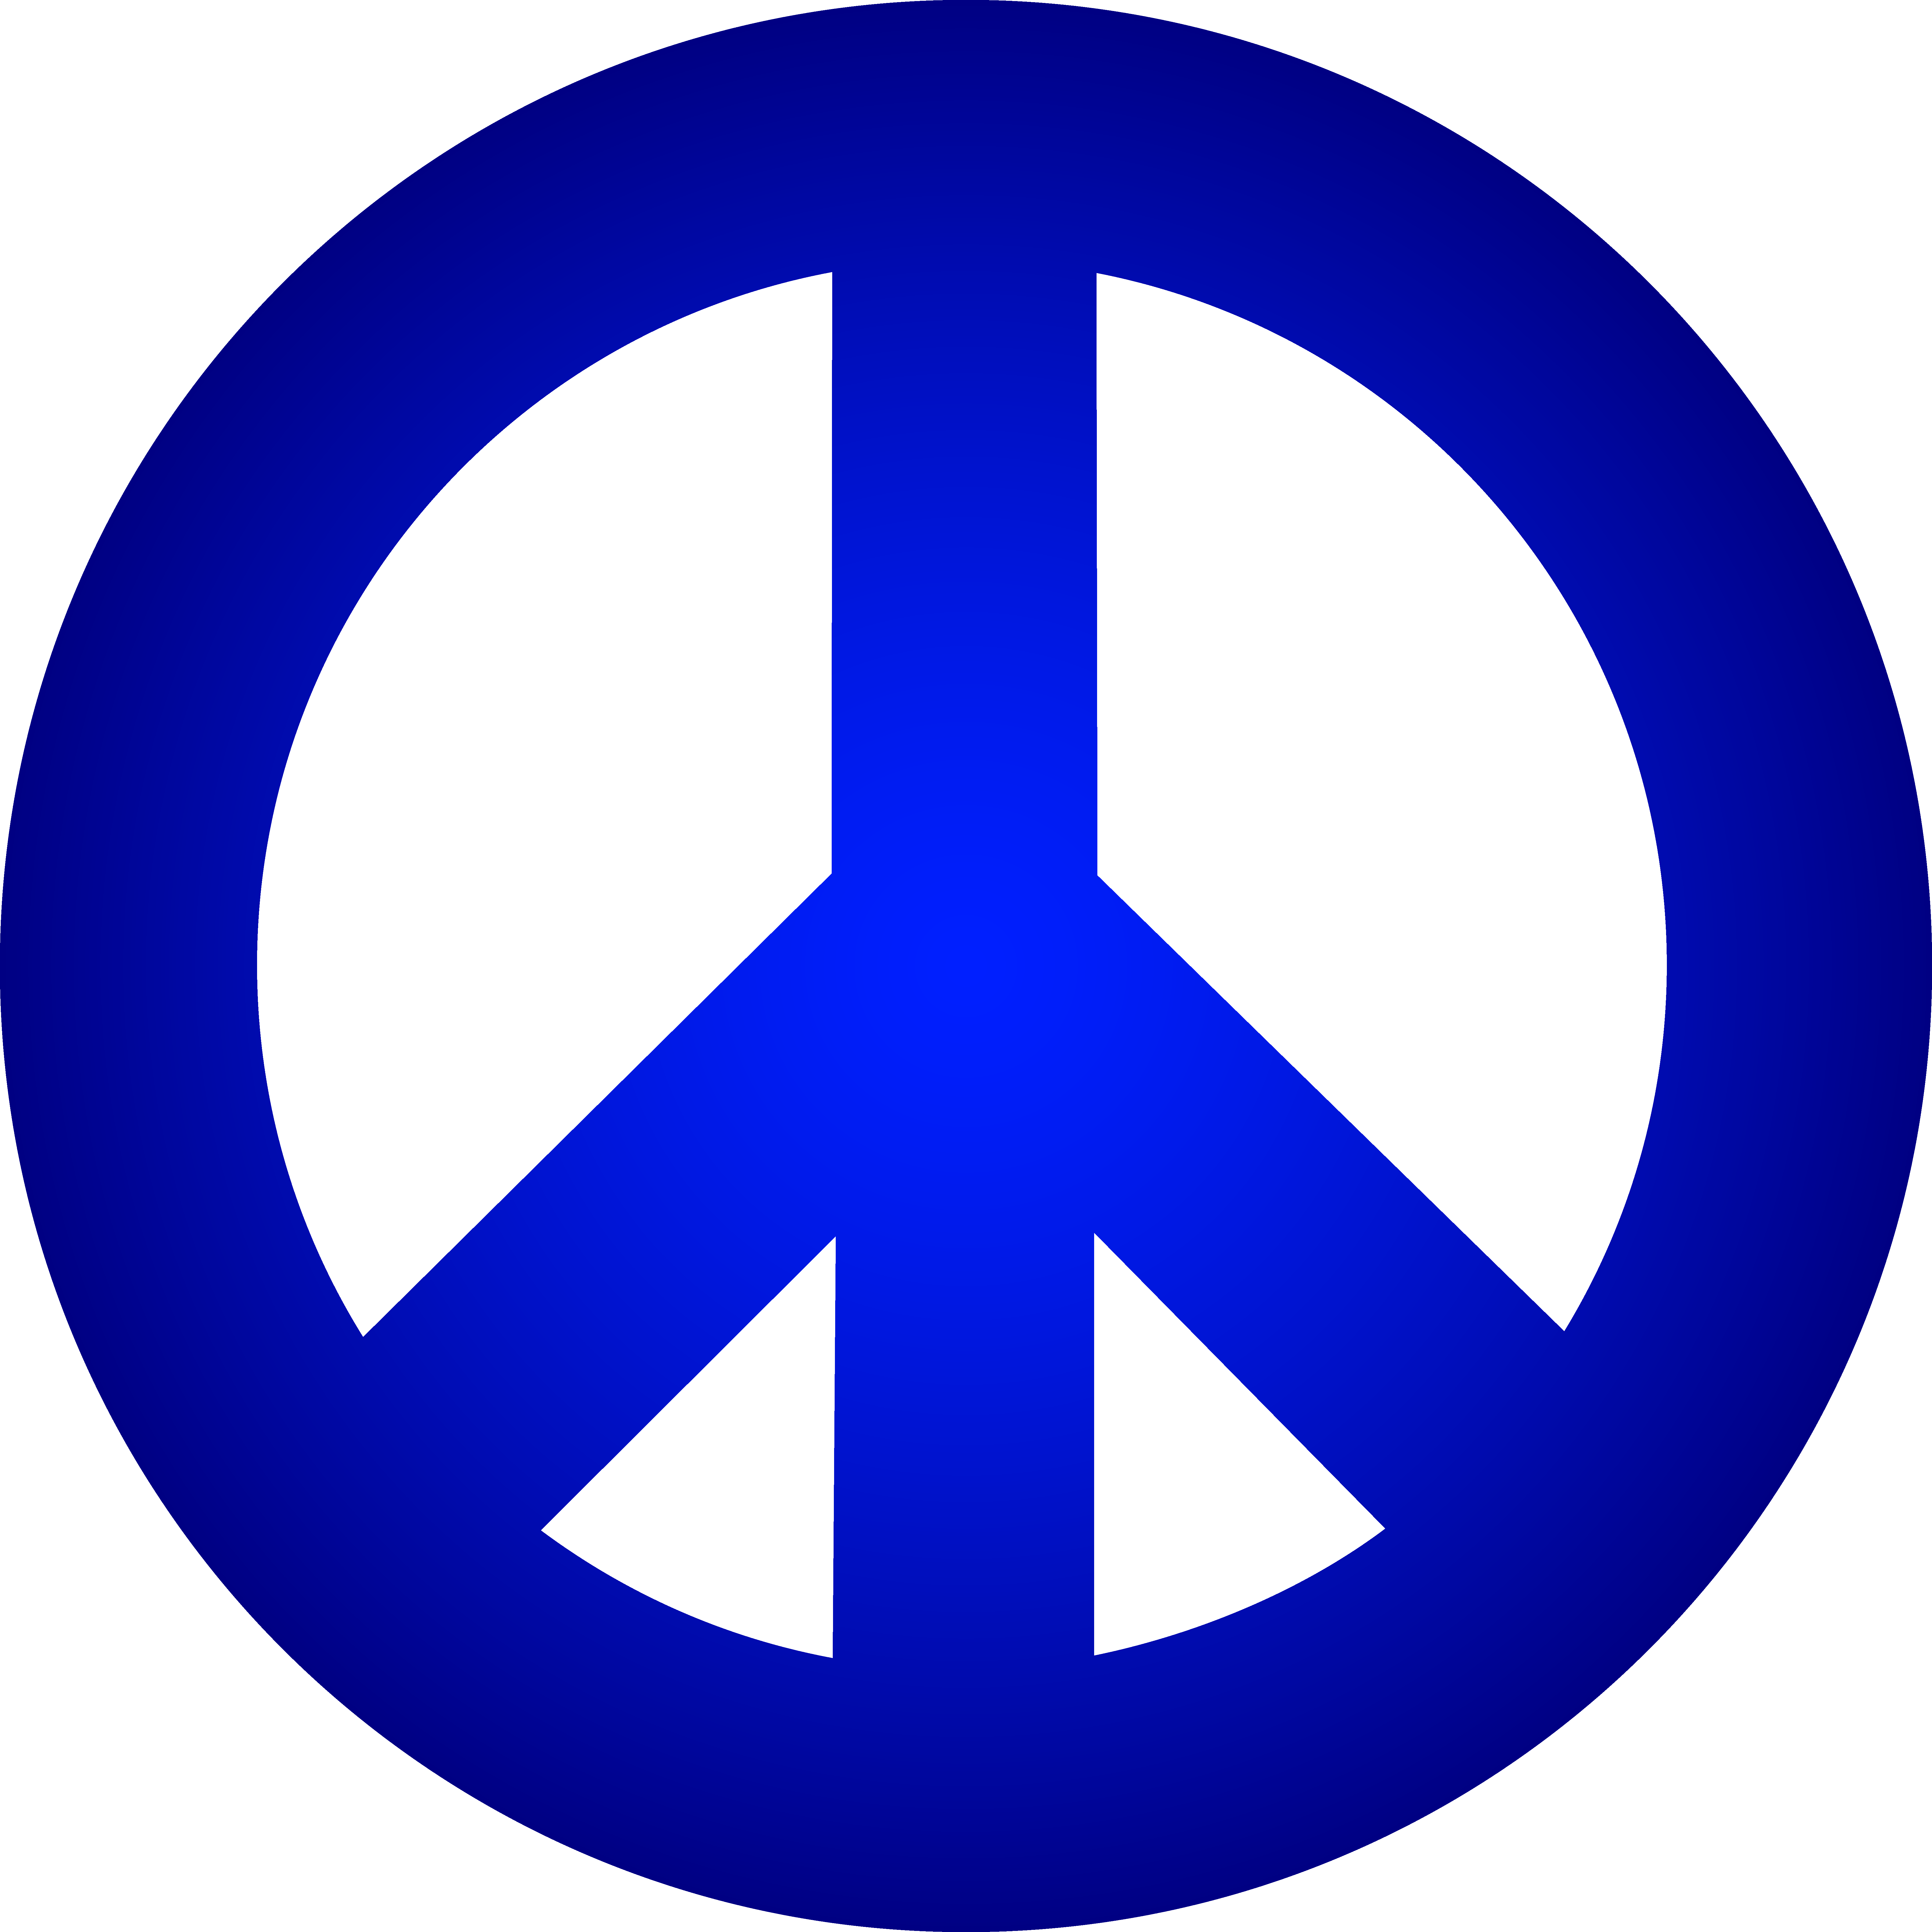 Blue Peace Sign